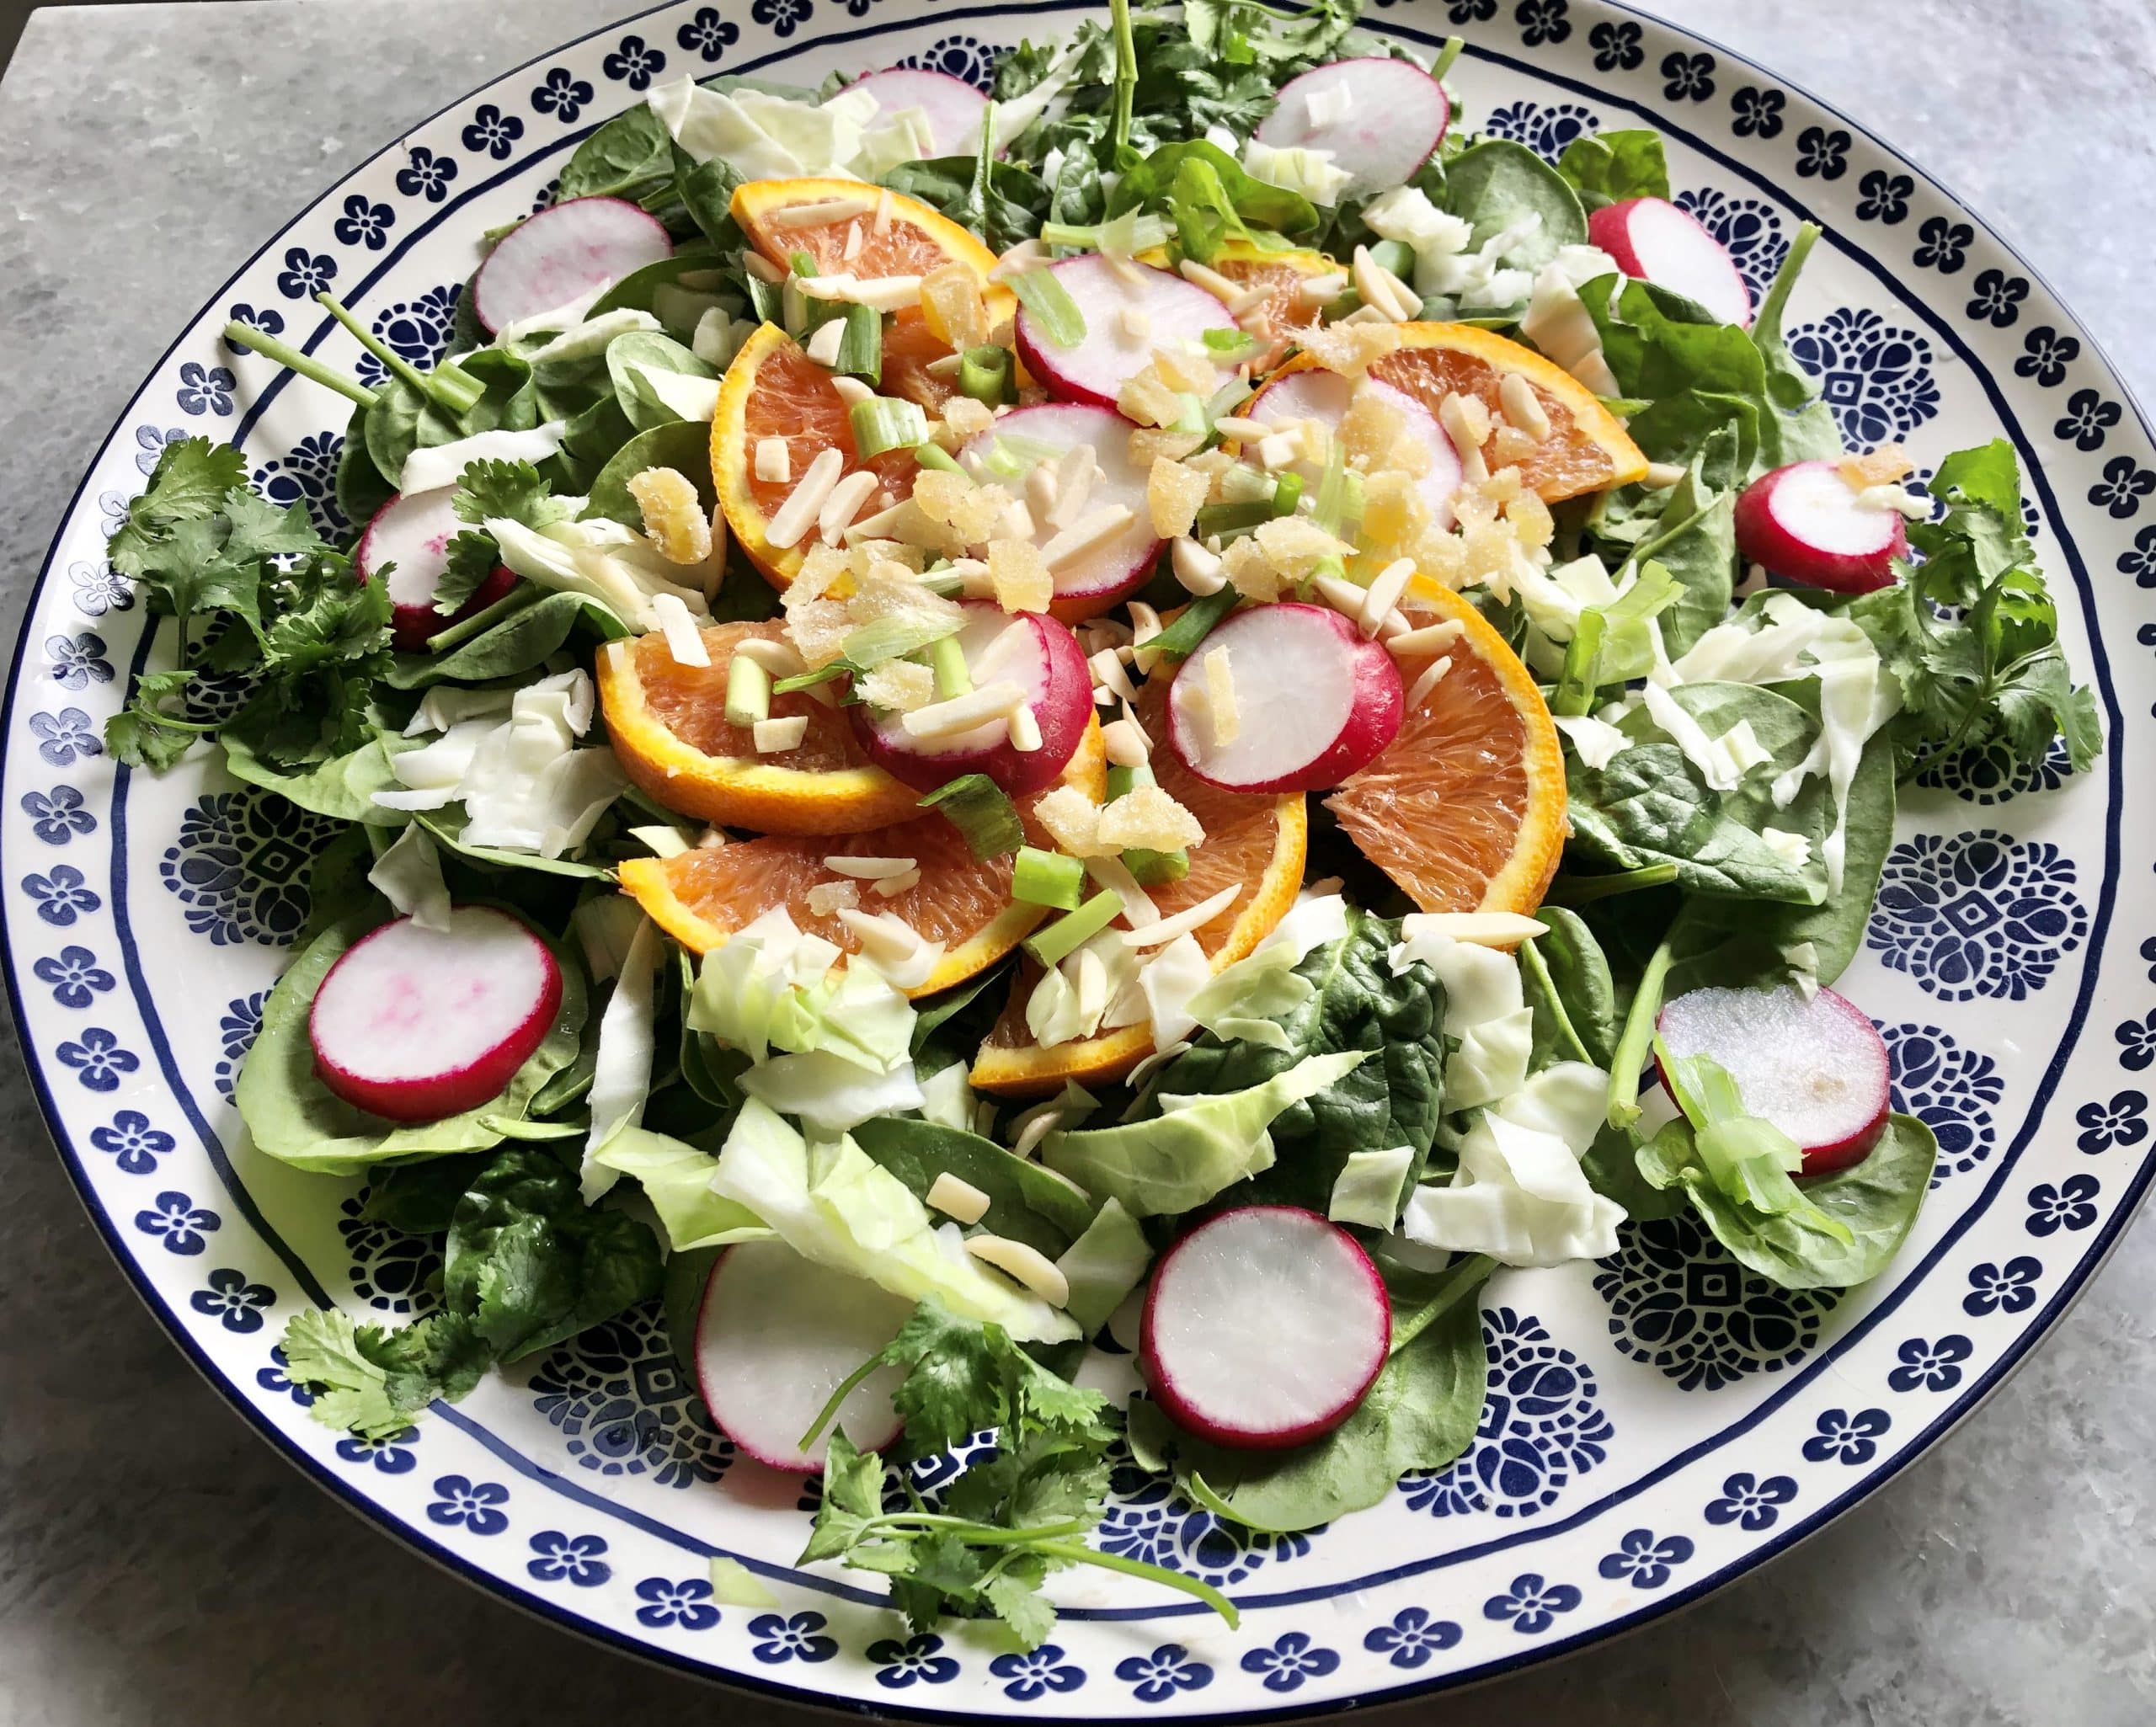 Salad using greens, oranges and radishes